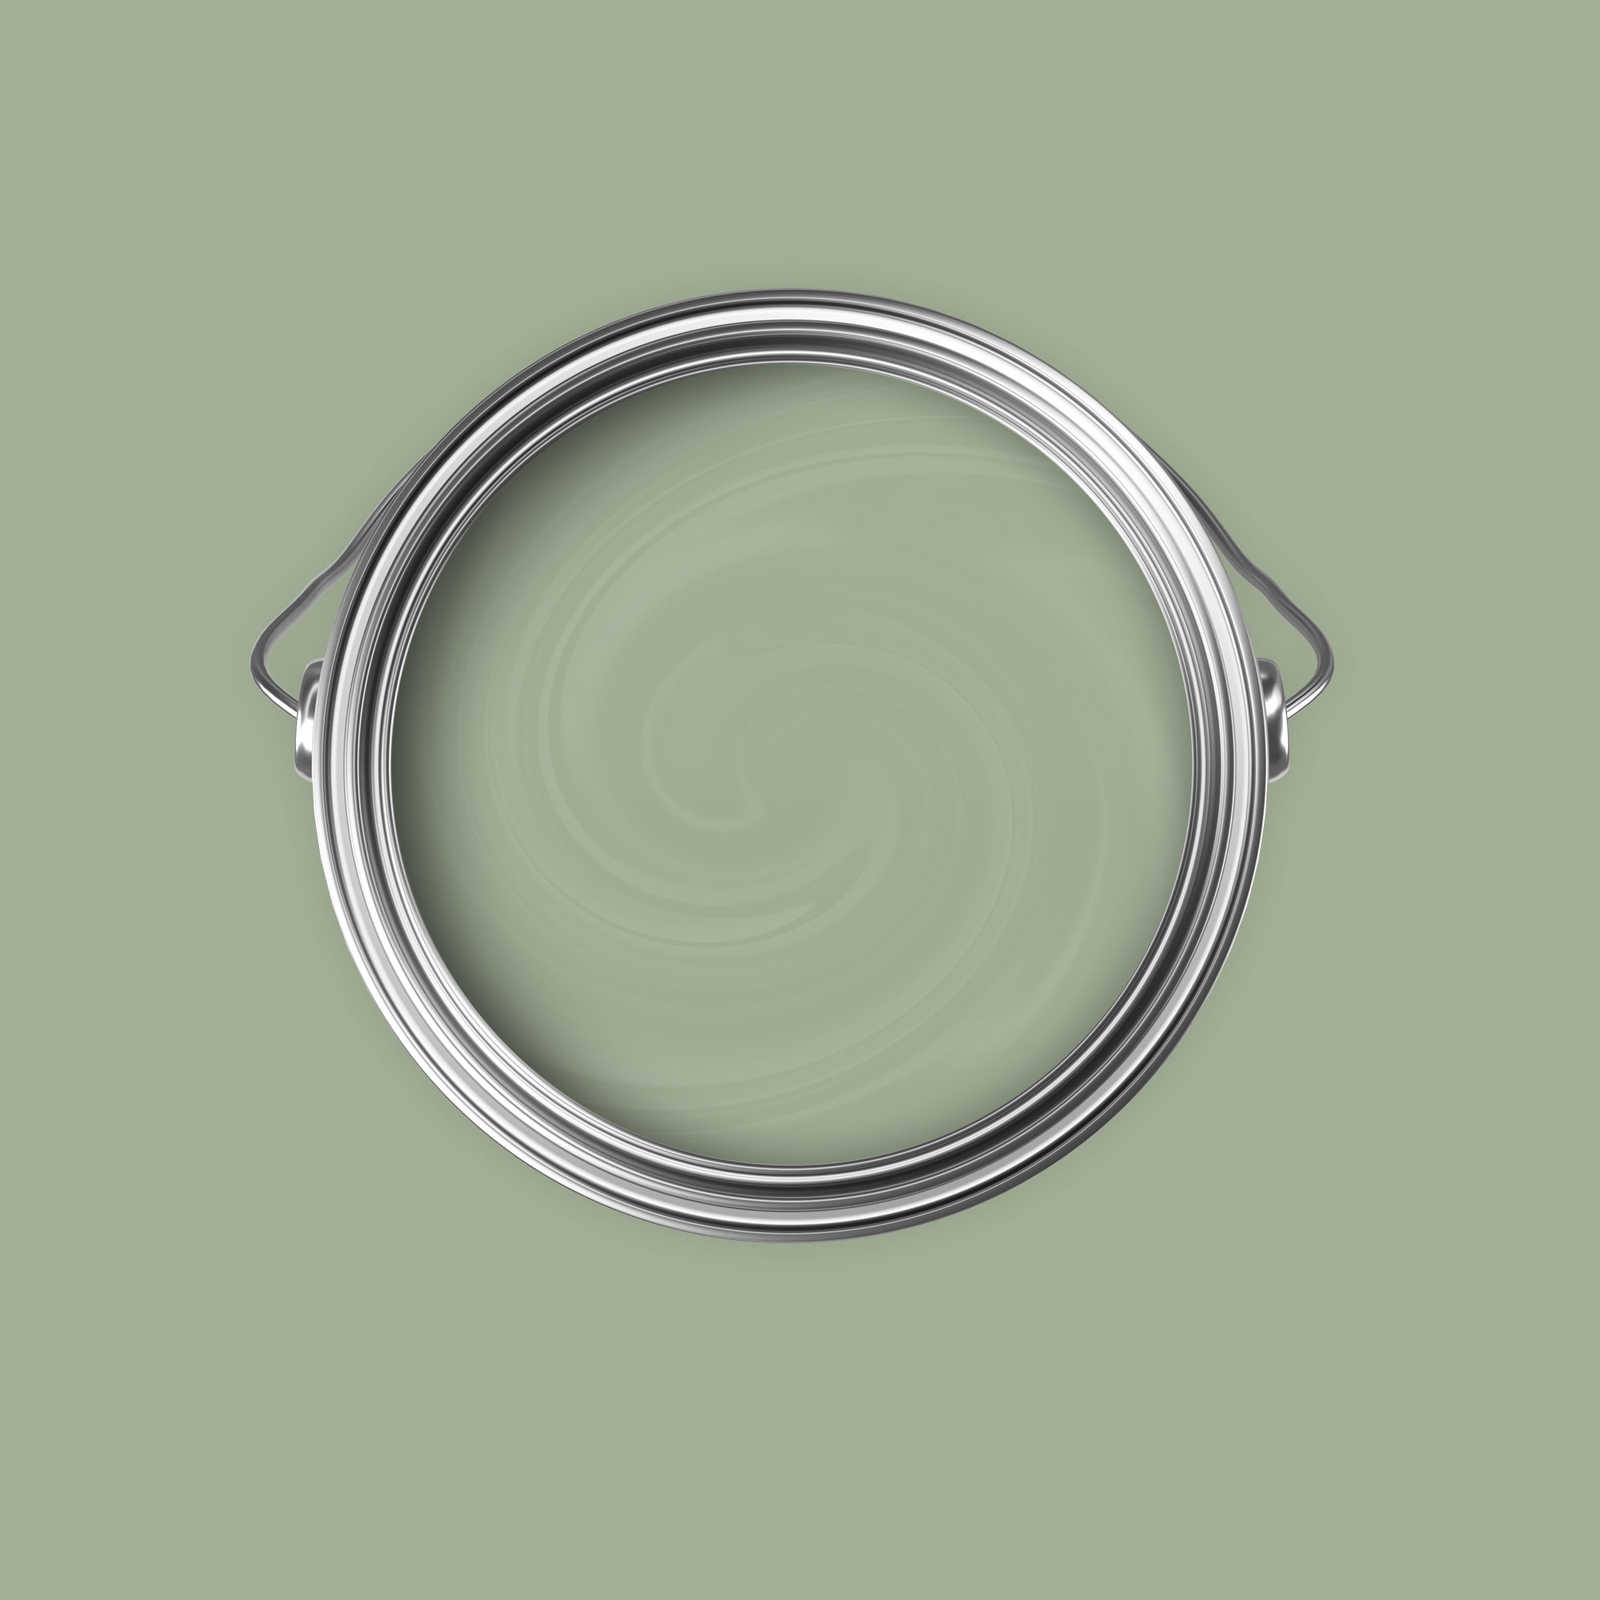             Pintura mural Premium verde oliva terroso »Gorgeous Green« NW502 – 5 litro
        